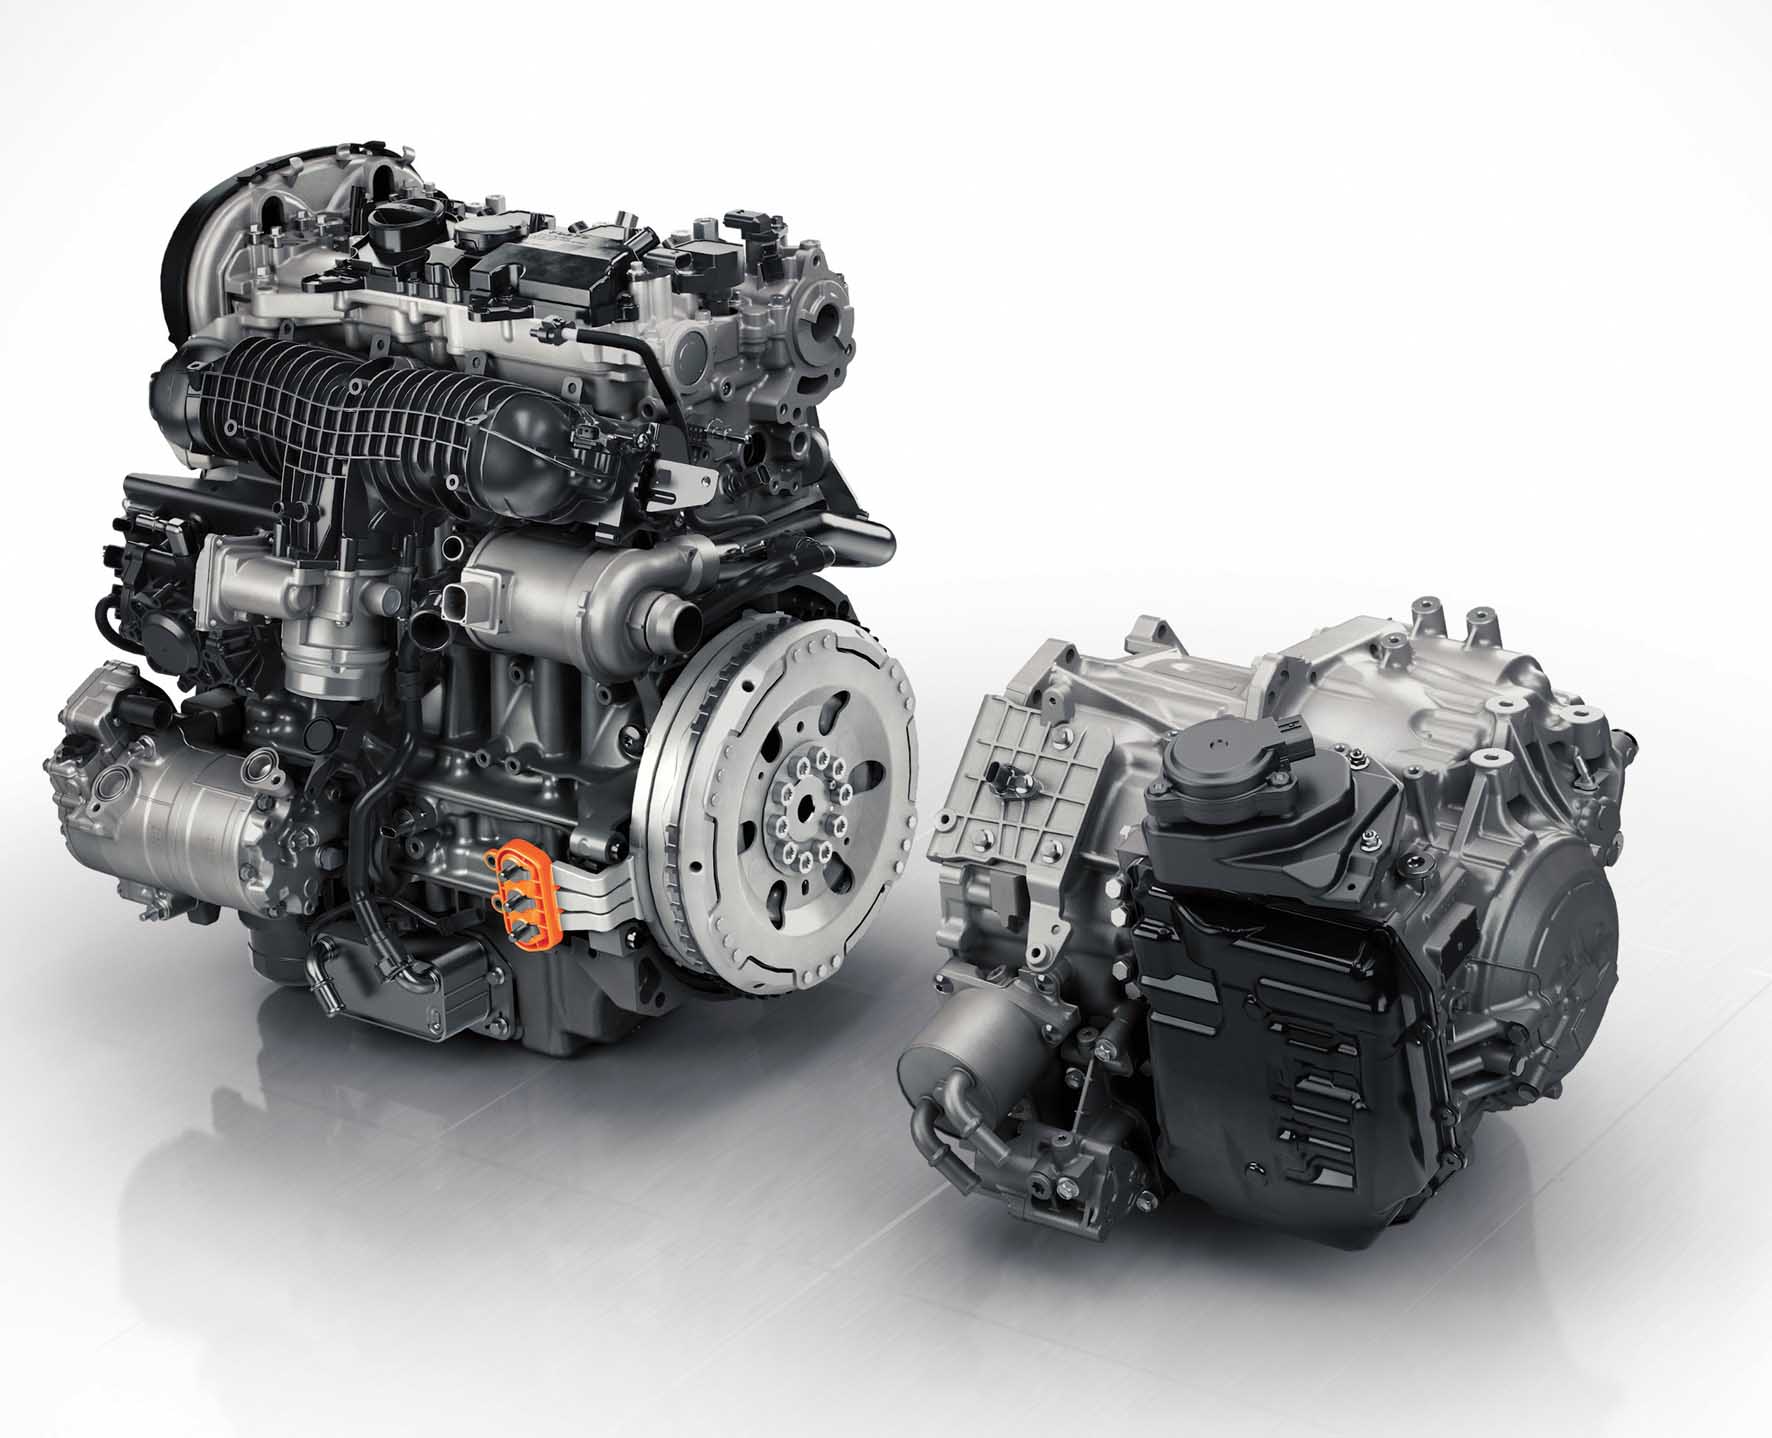 Volvo 2014 nuova XC 90 gruppo motore benzina ed elettrico 1